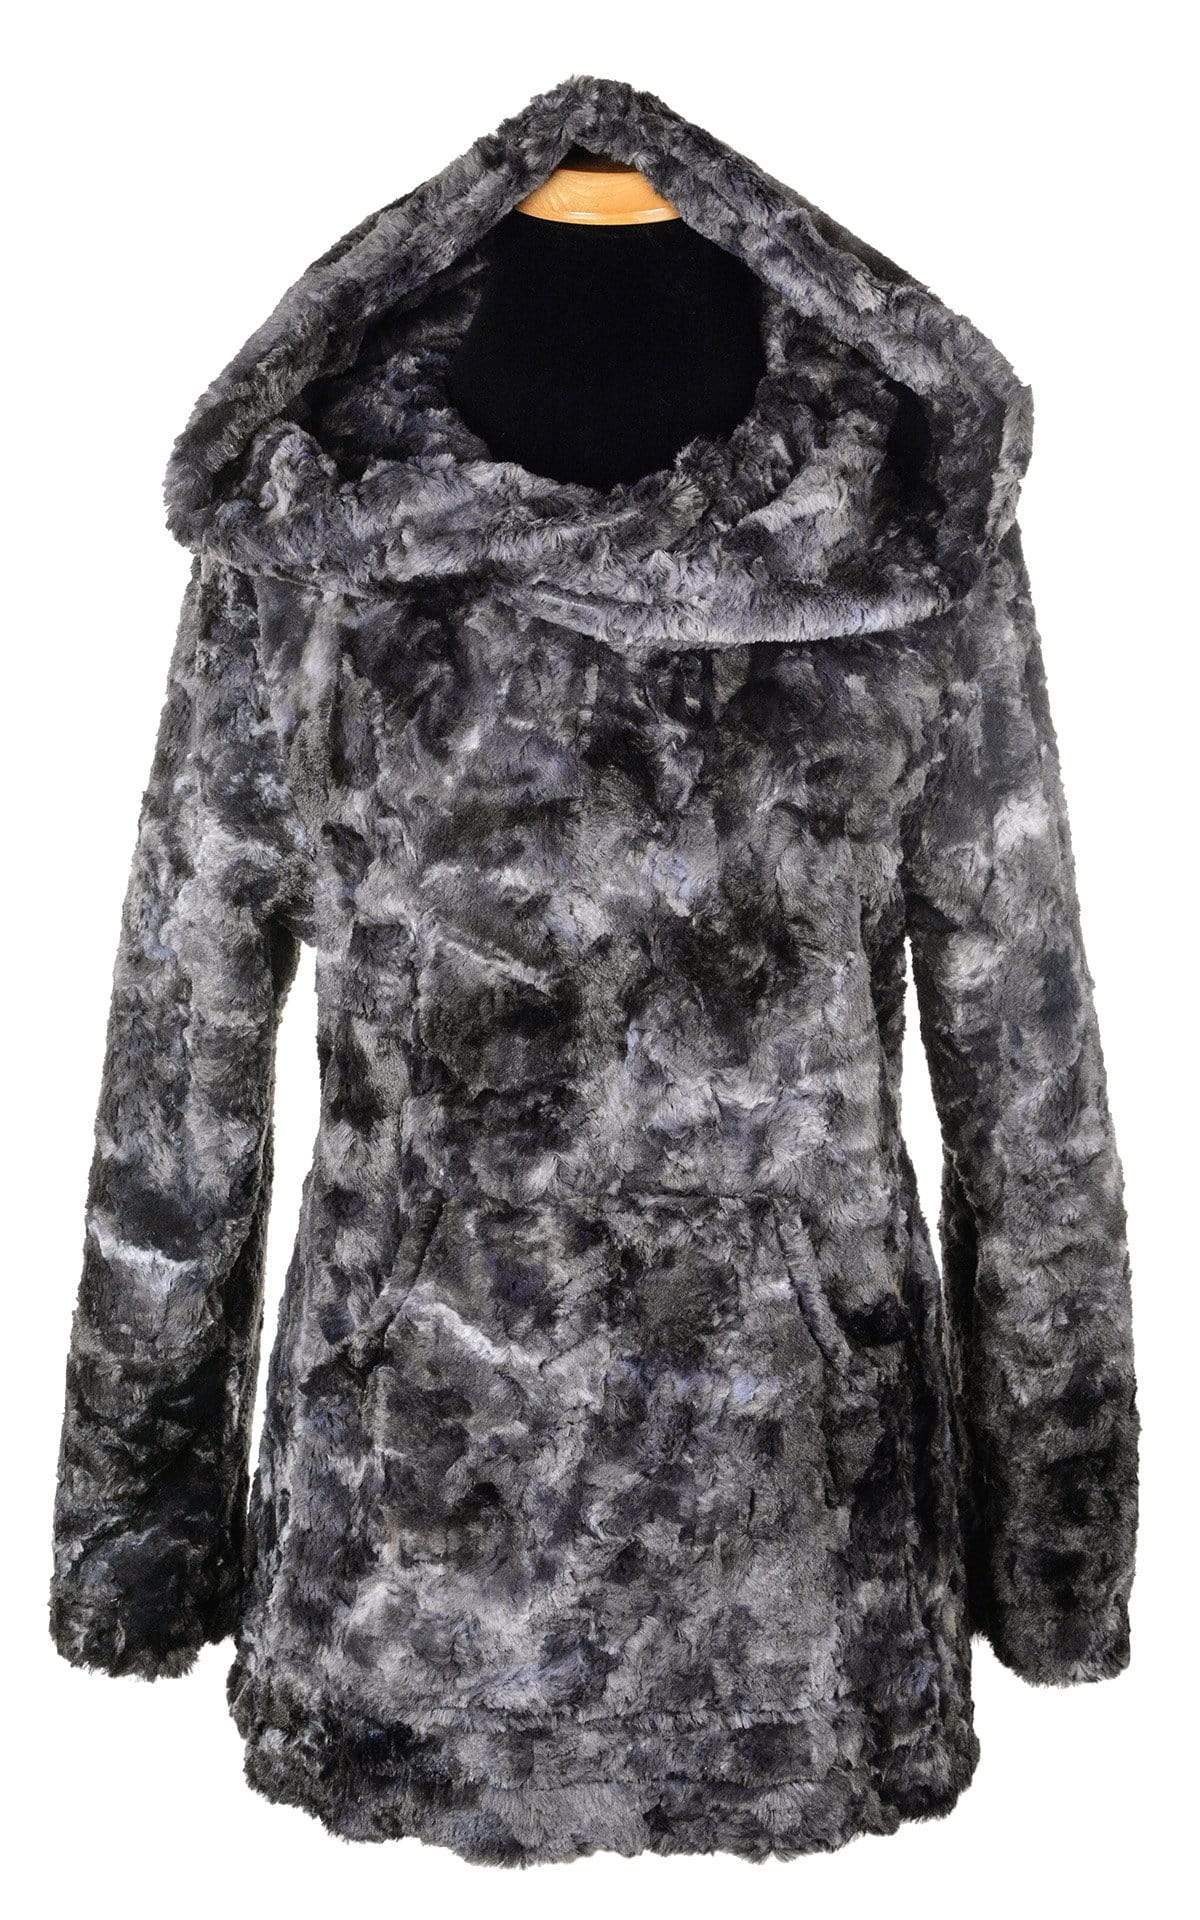 Hoody Lounger | Luxury Faux  Fur in Highland Skye Faux Fur, Denim and Gray Tie Dye | Handmade By Pandemonium Millinery | Seattle WA USA